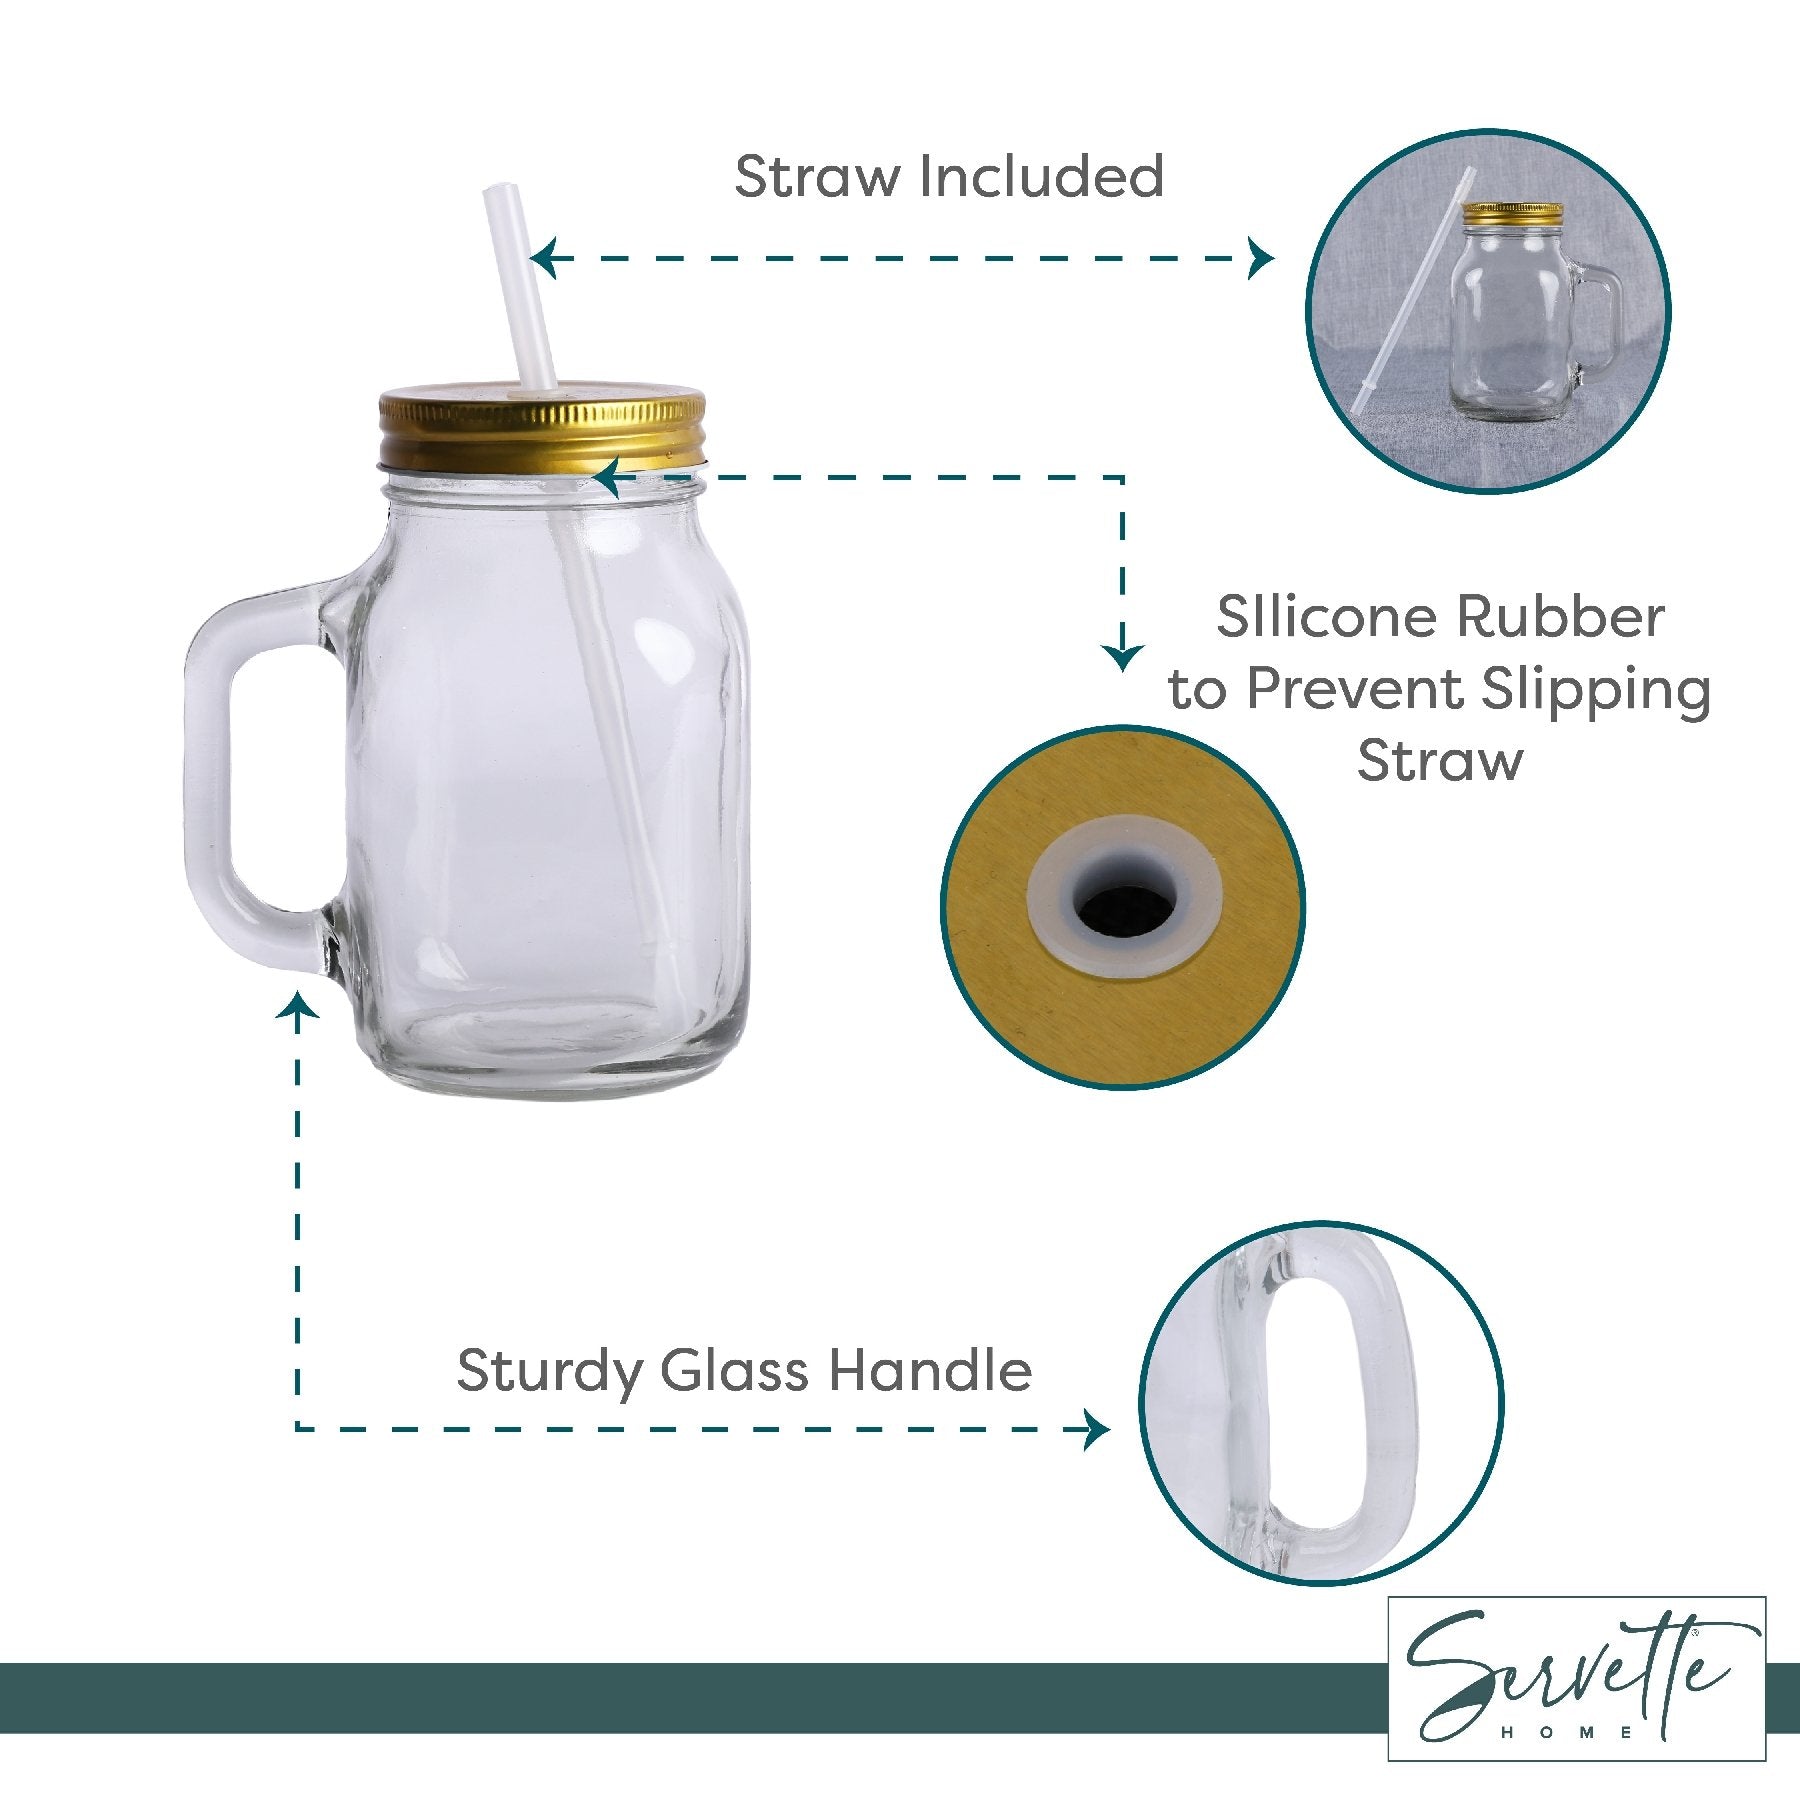 Servette Home Mason Glass Jar Drinking Glasses with Handles & Copper Lid -  Set of 2 